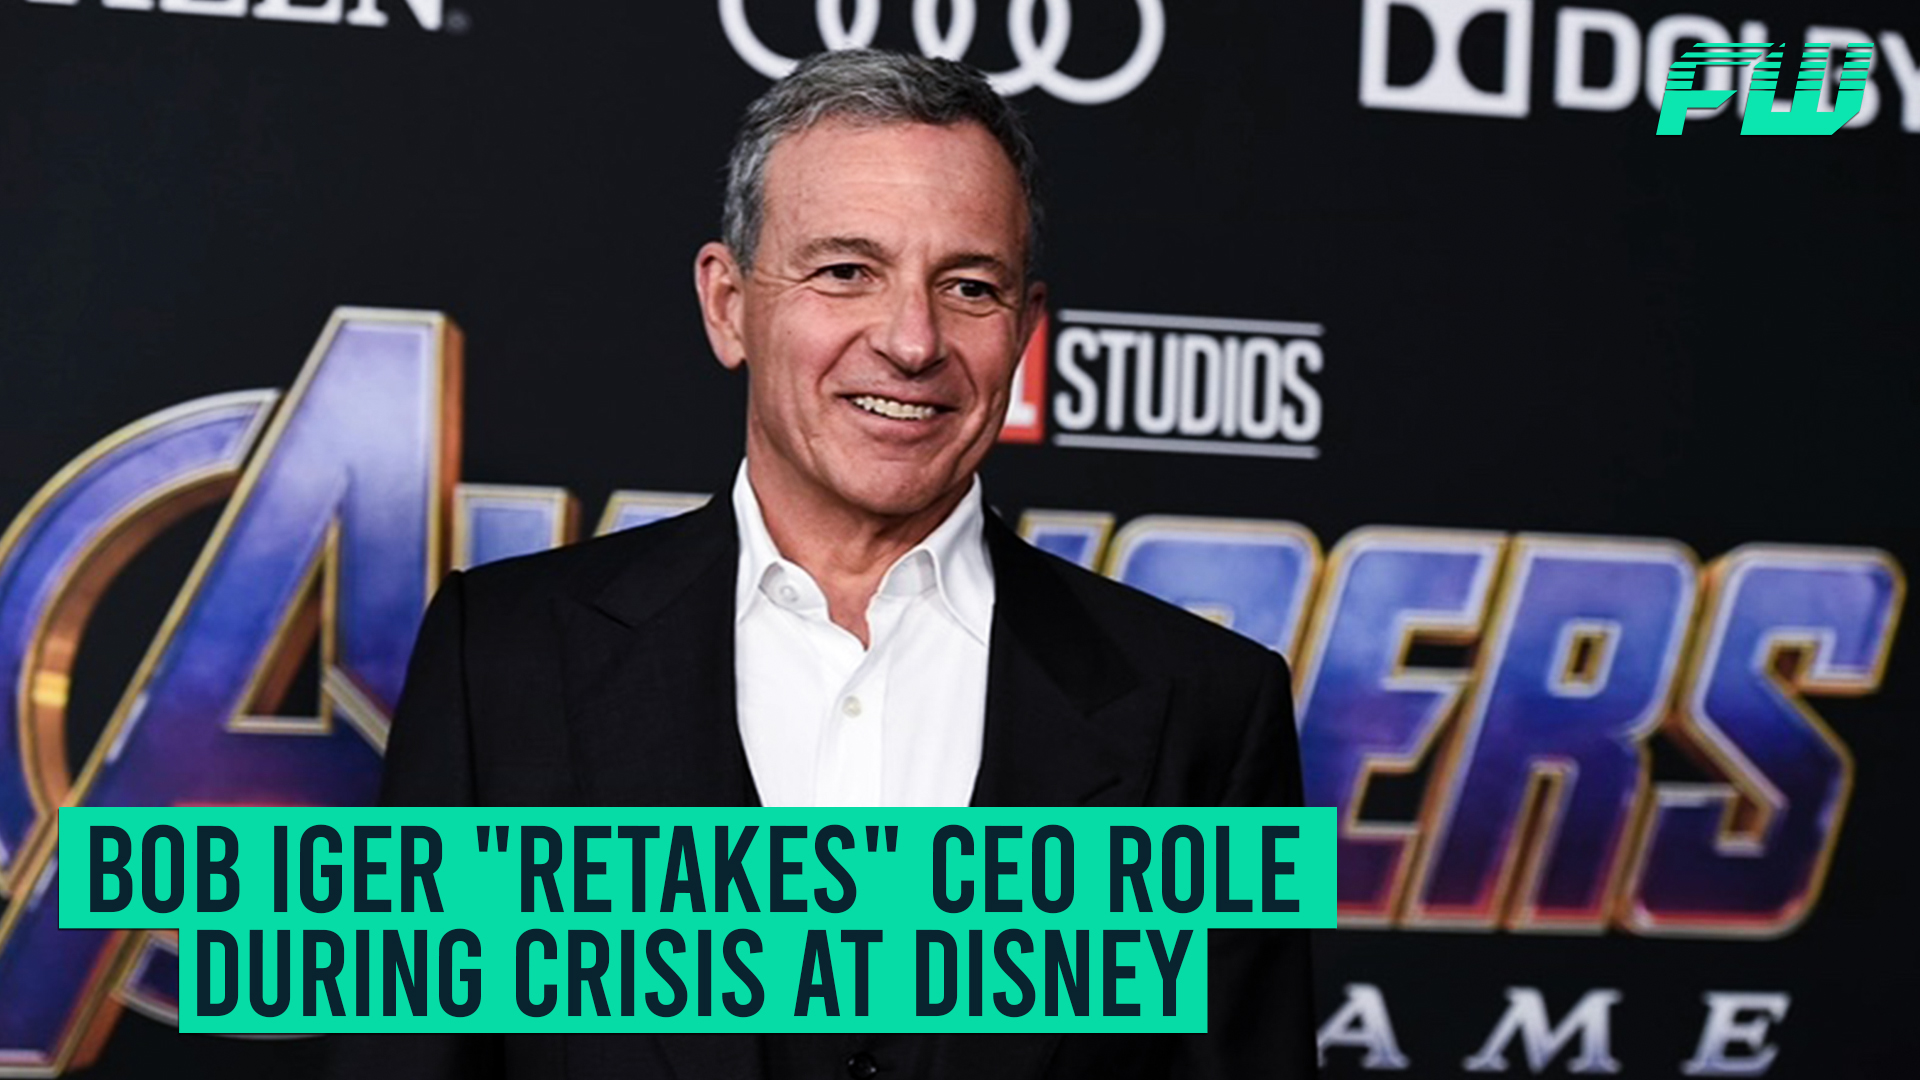 Bob Iger Retakes CEO Role During Crisis At Disney